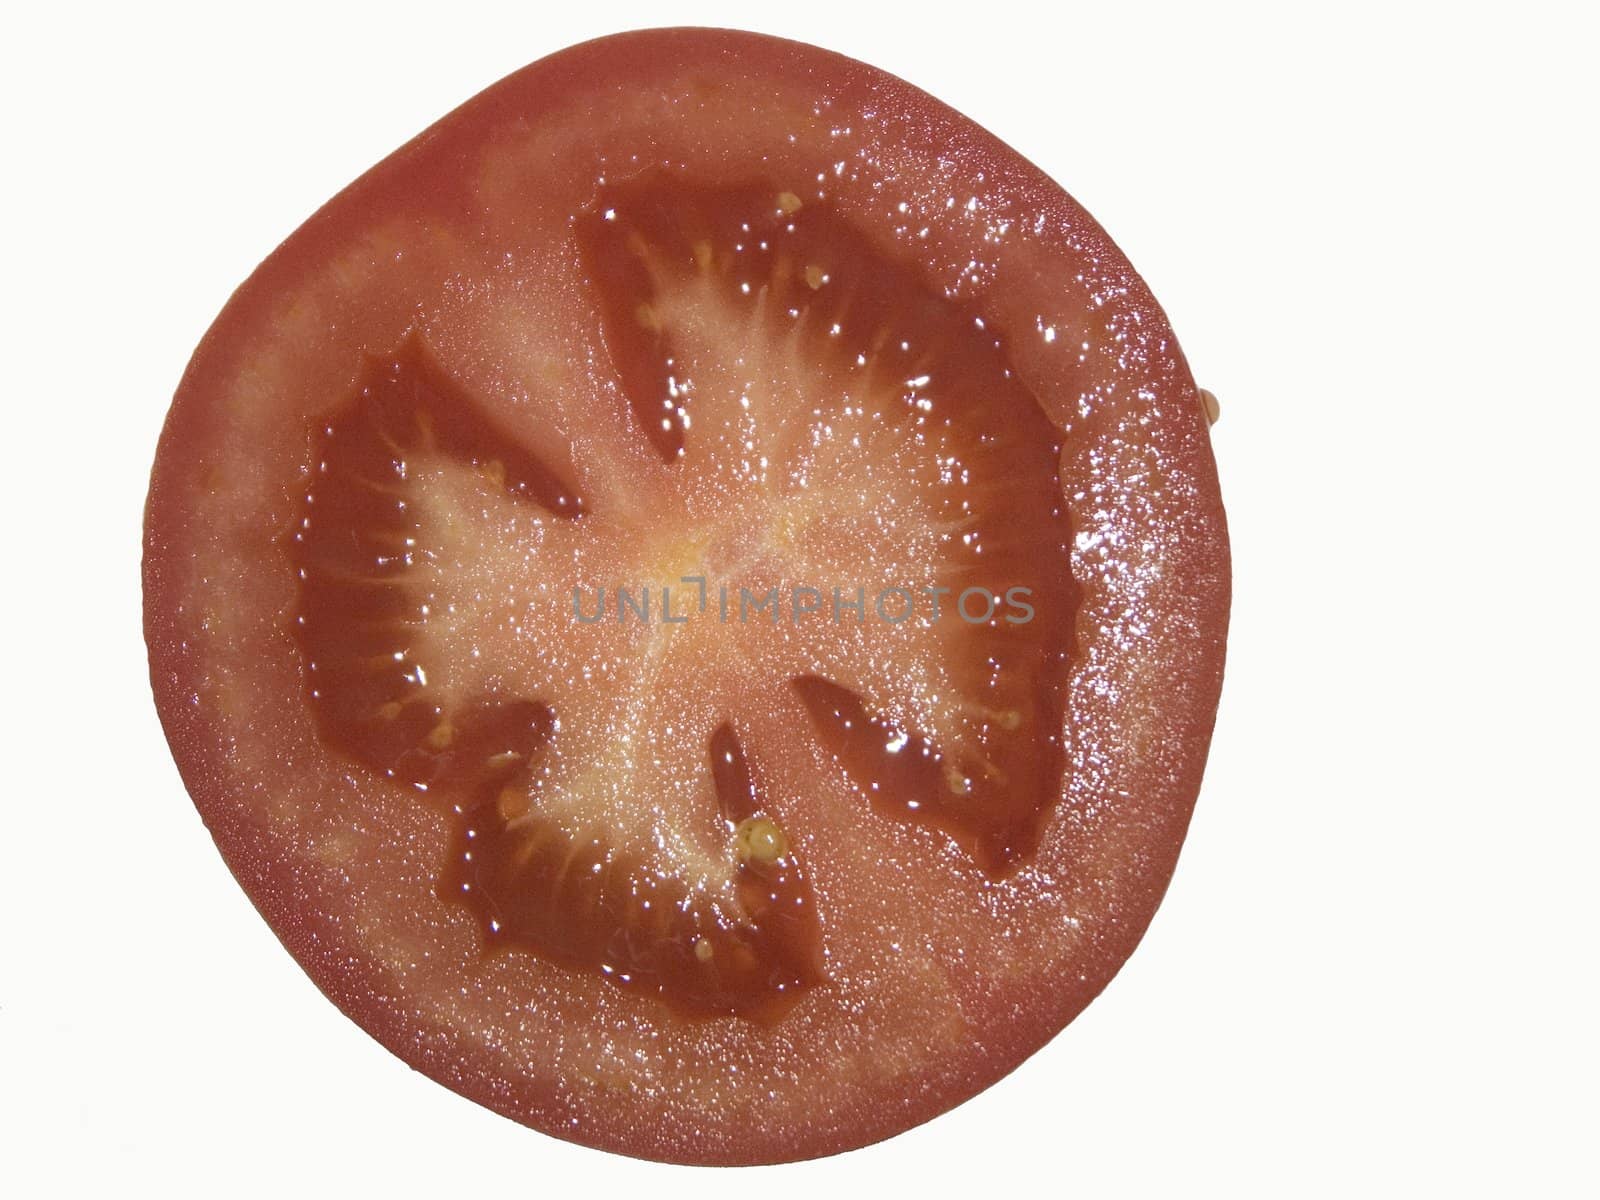 Half of tomato on a white background